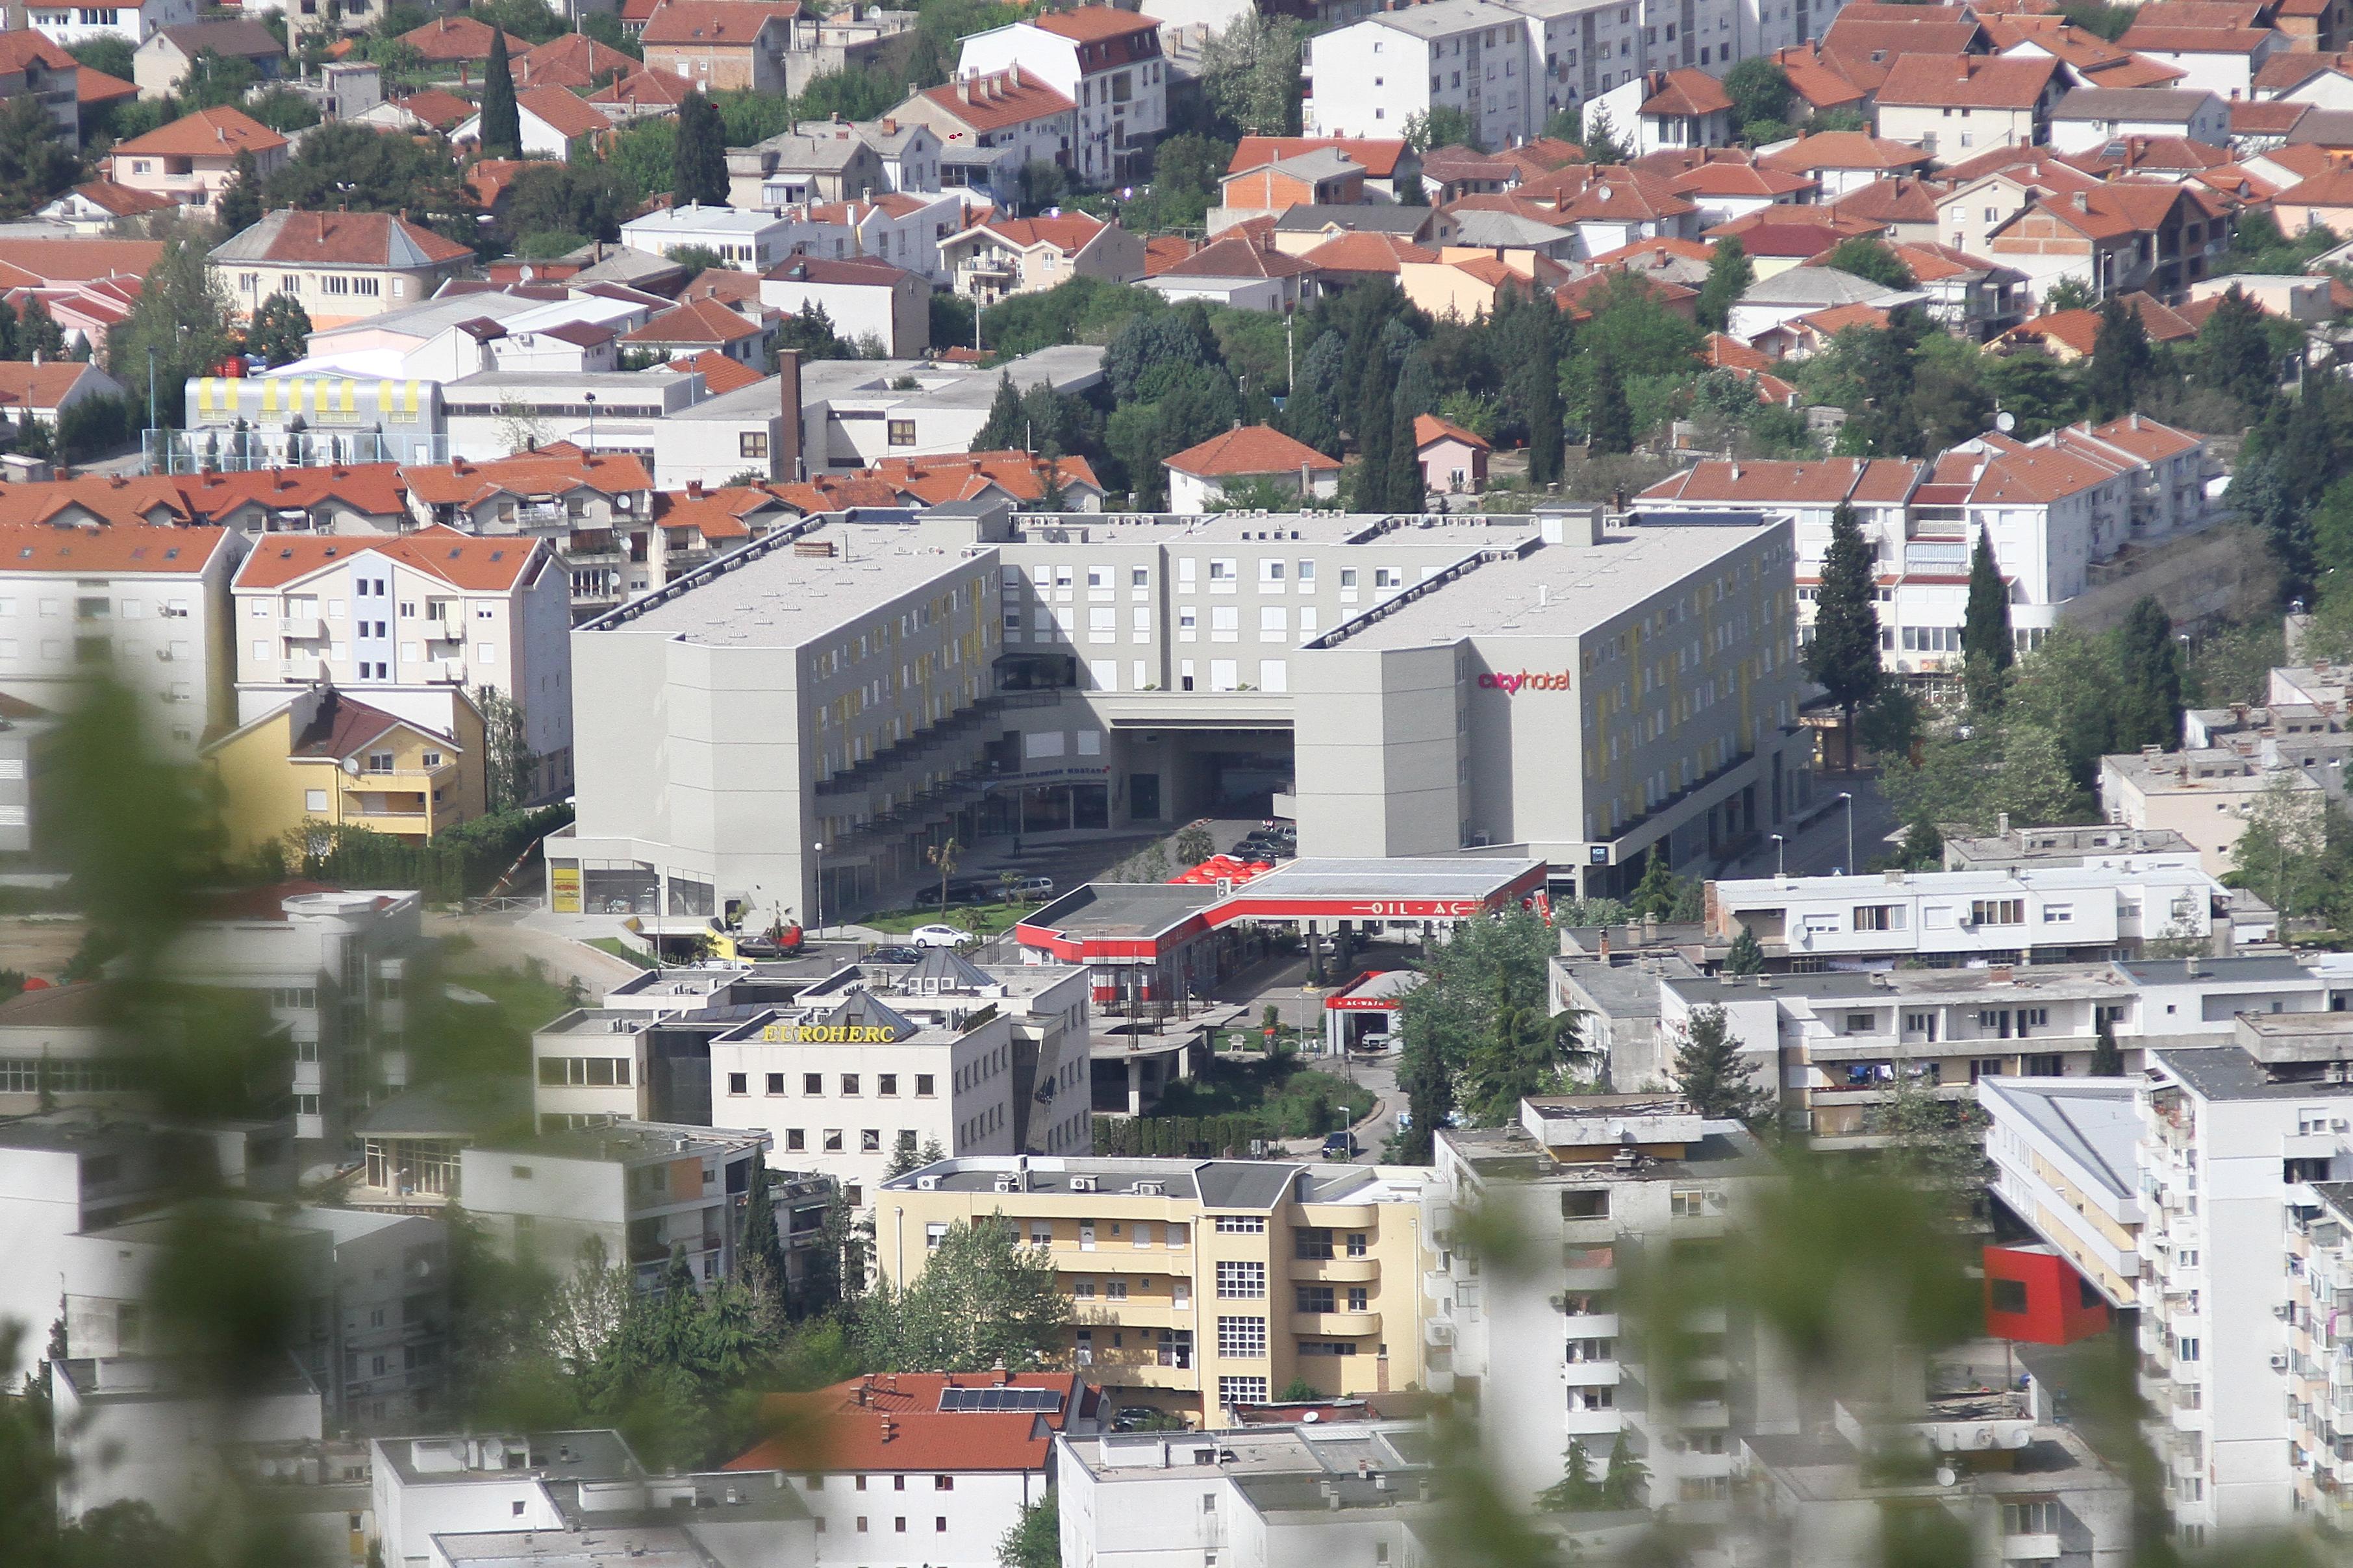 City Hotel Mostar